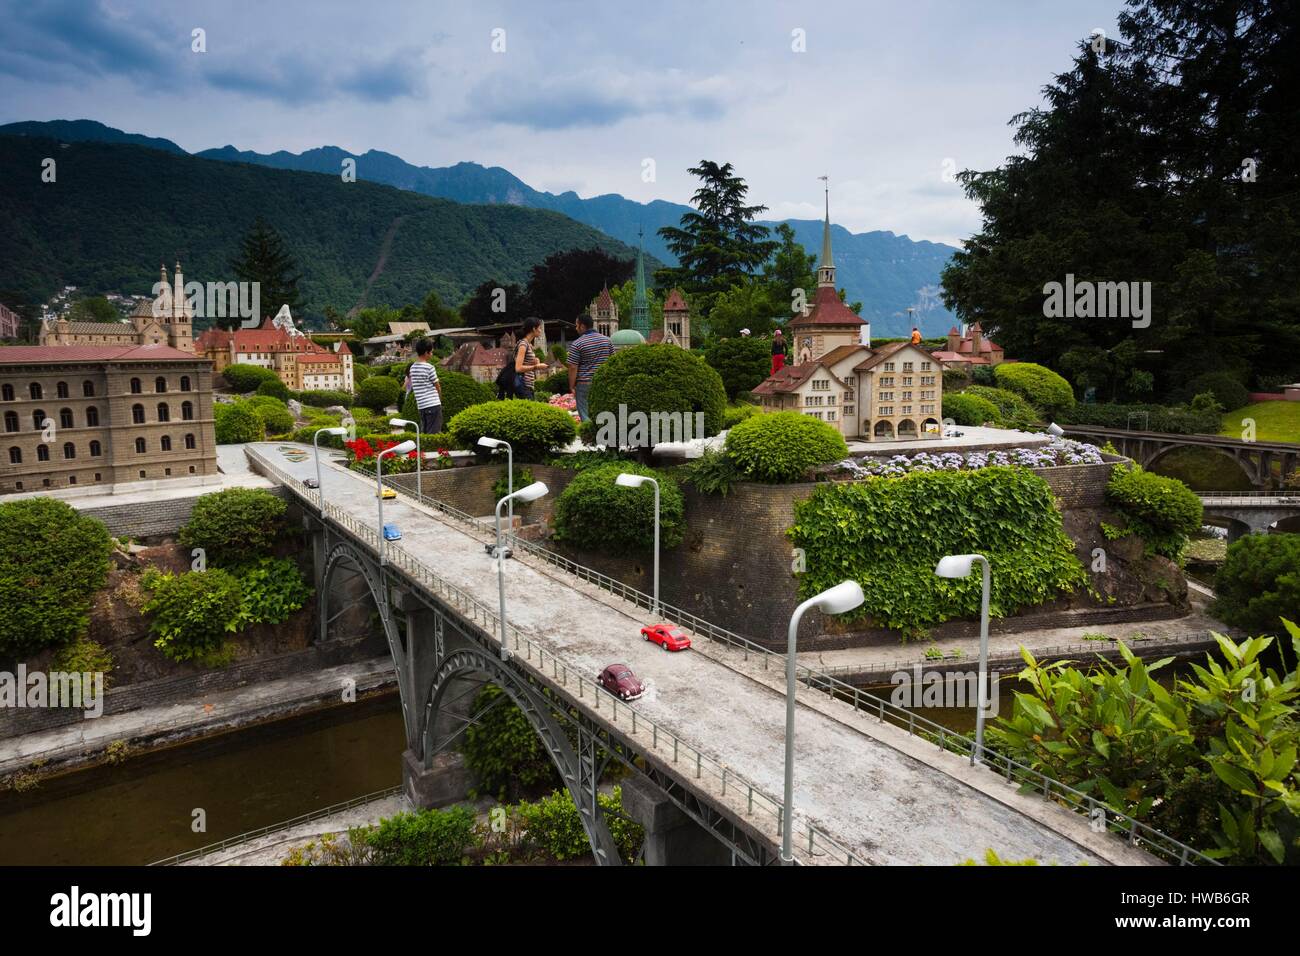 Switzerland, Ticino, Lake Lugano, Melide, Swissminiatur, Miniature Switzerland model theme park Stock Photo